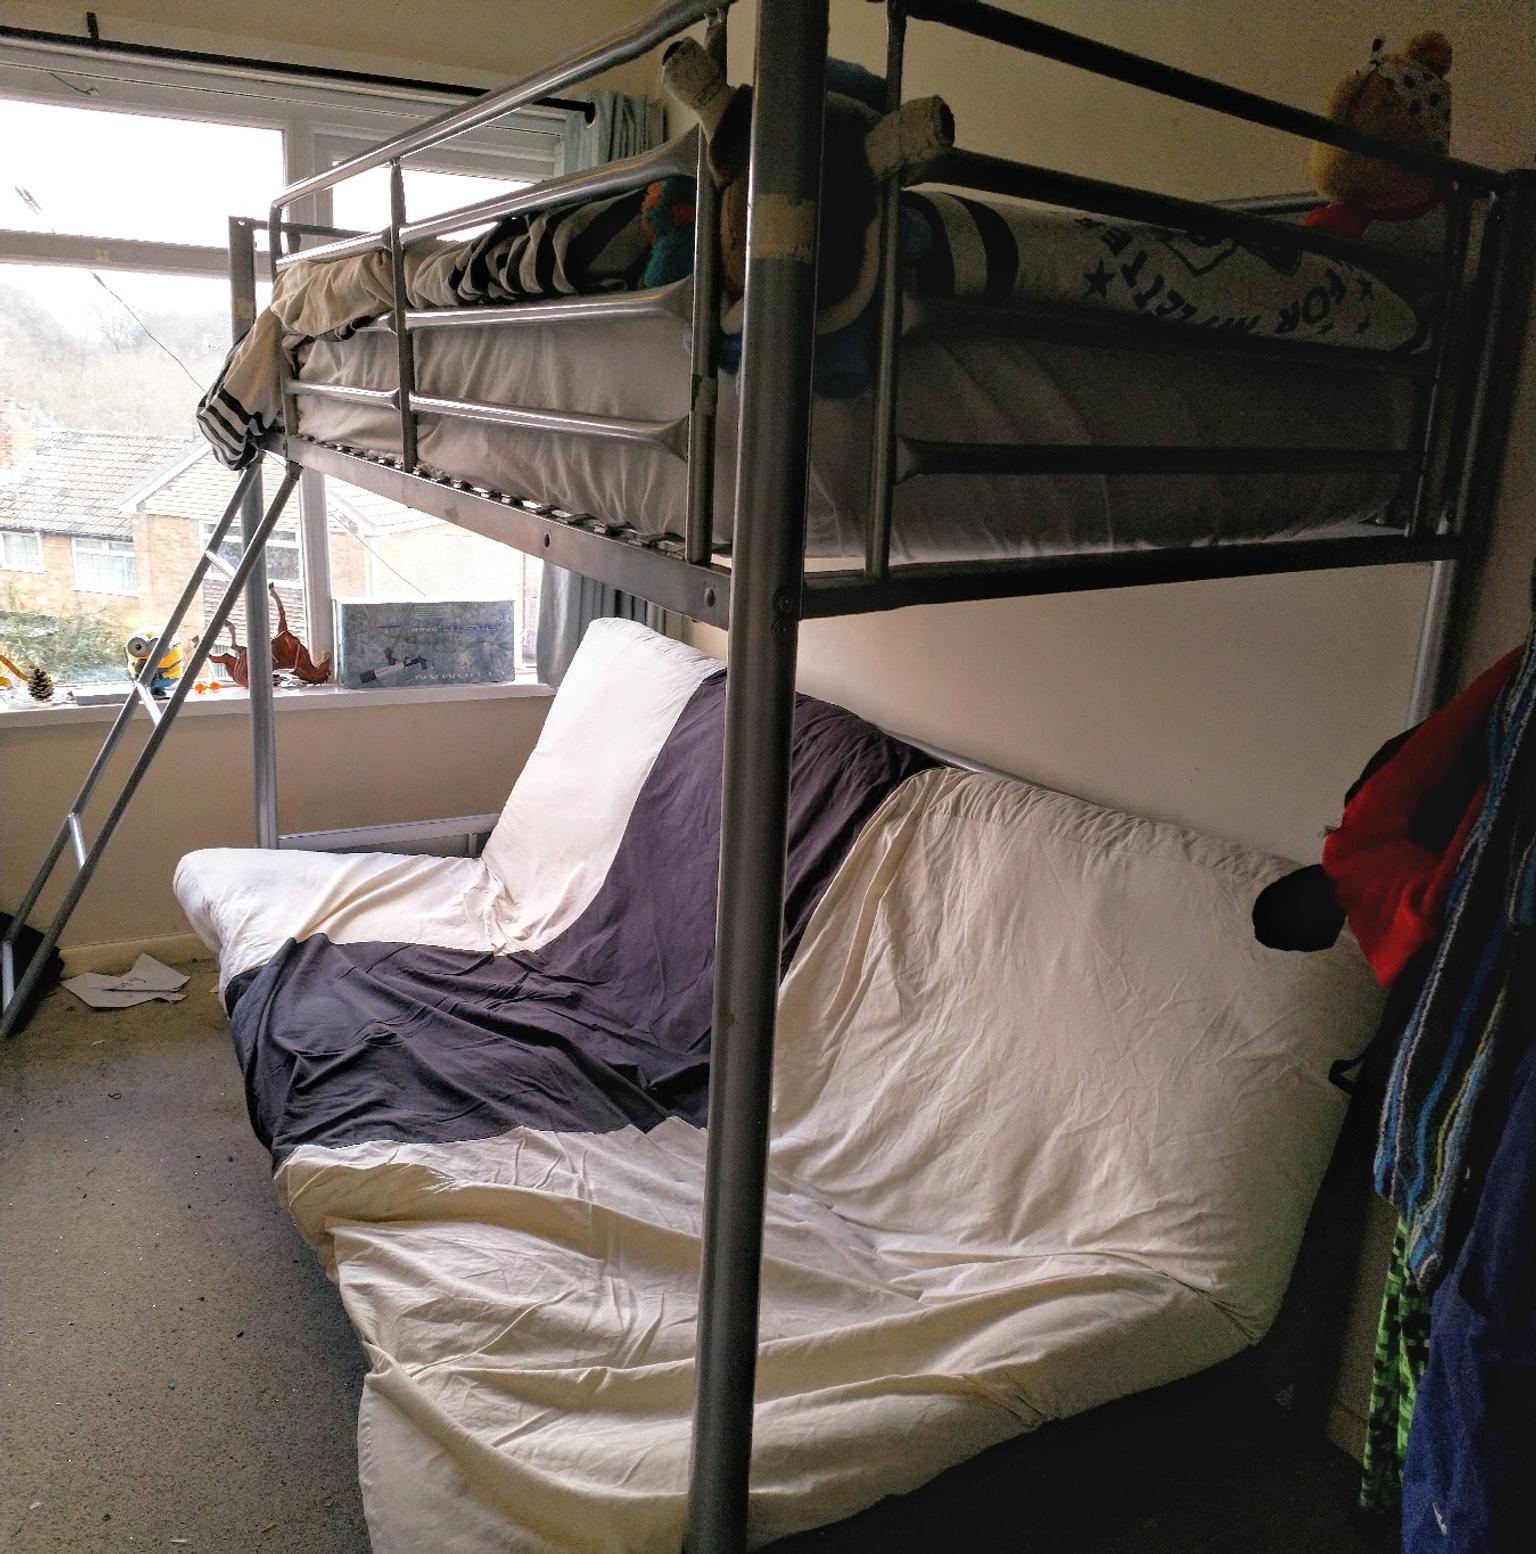 double futon bunk bed